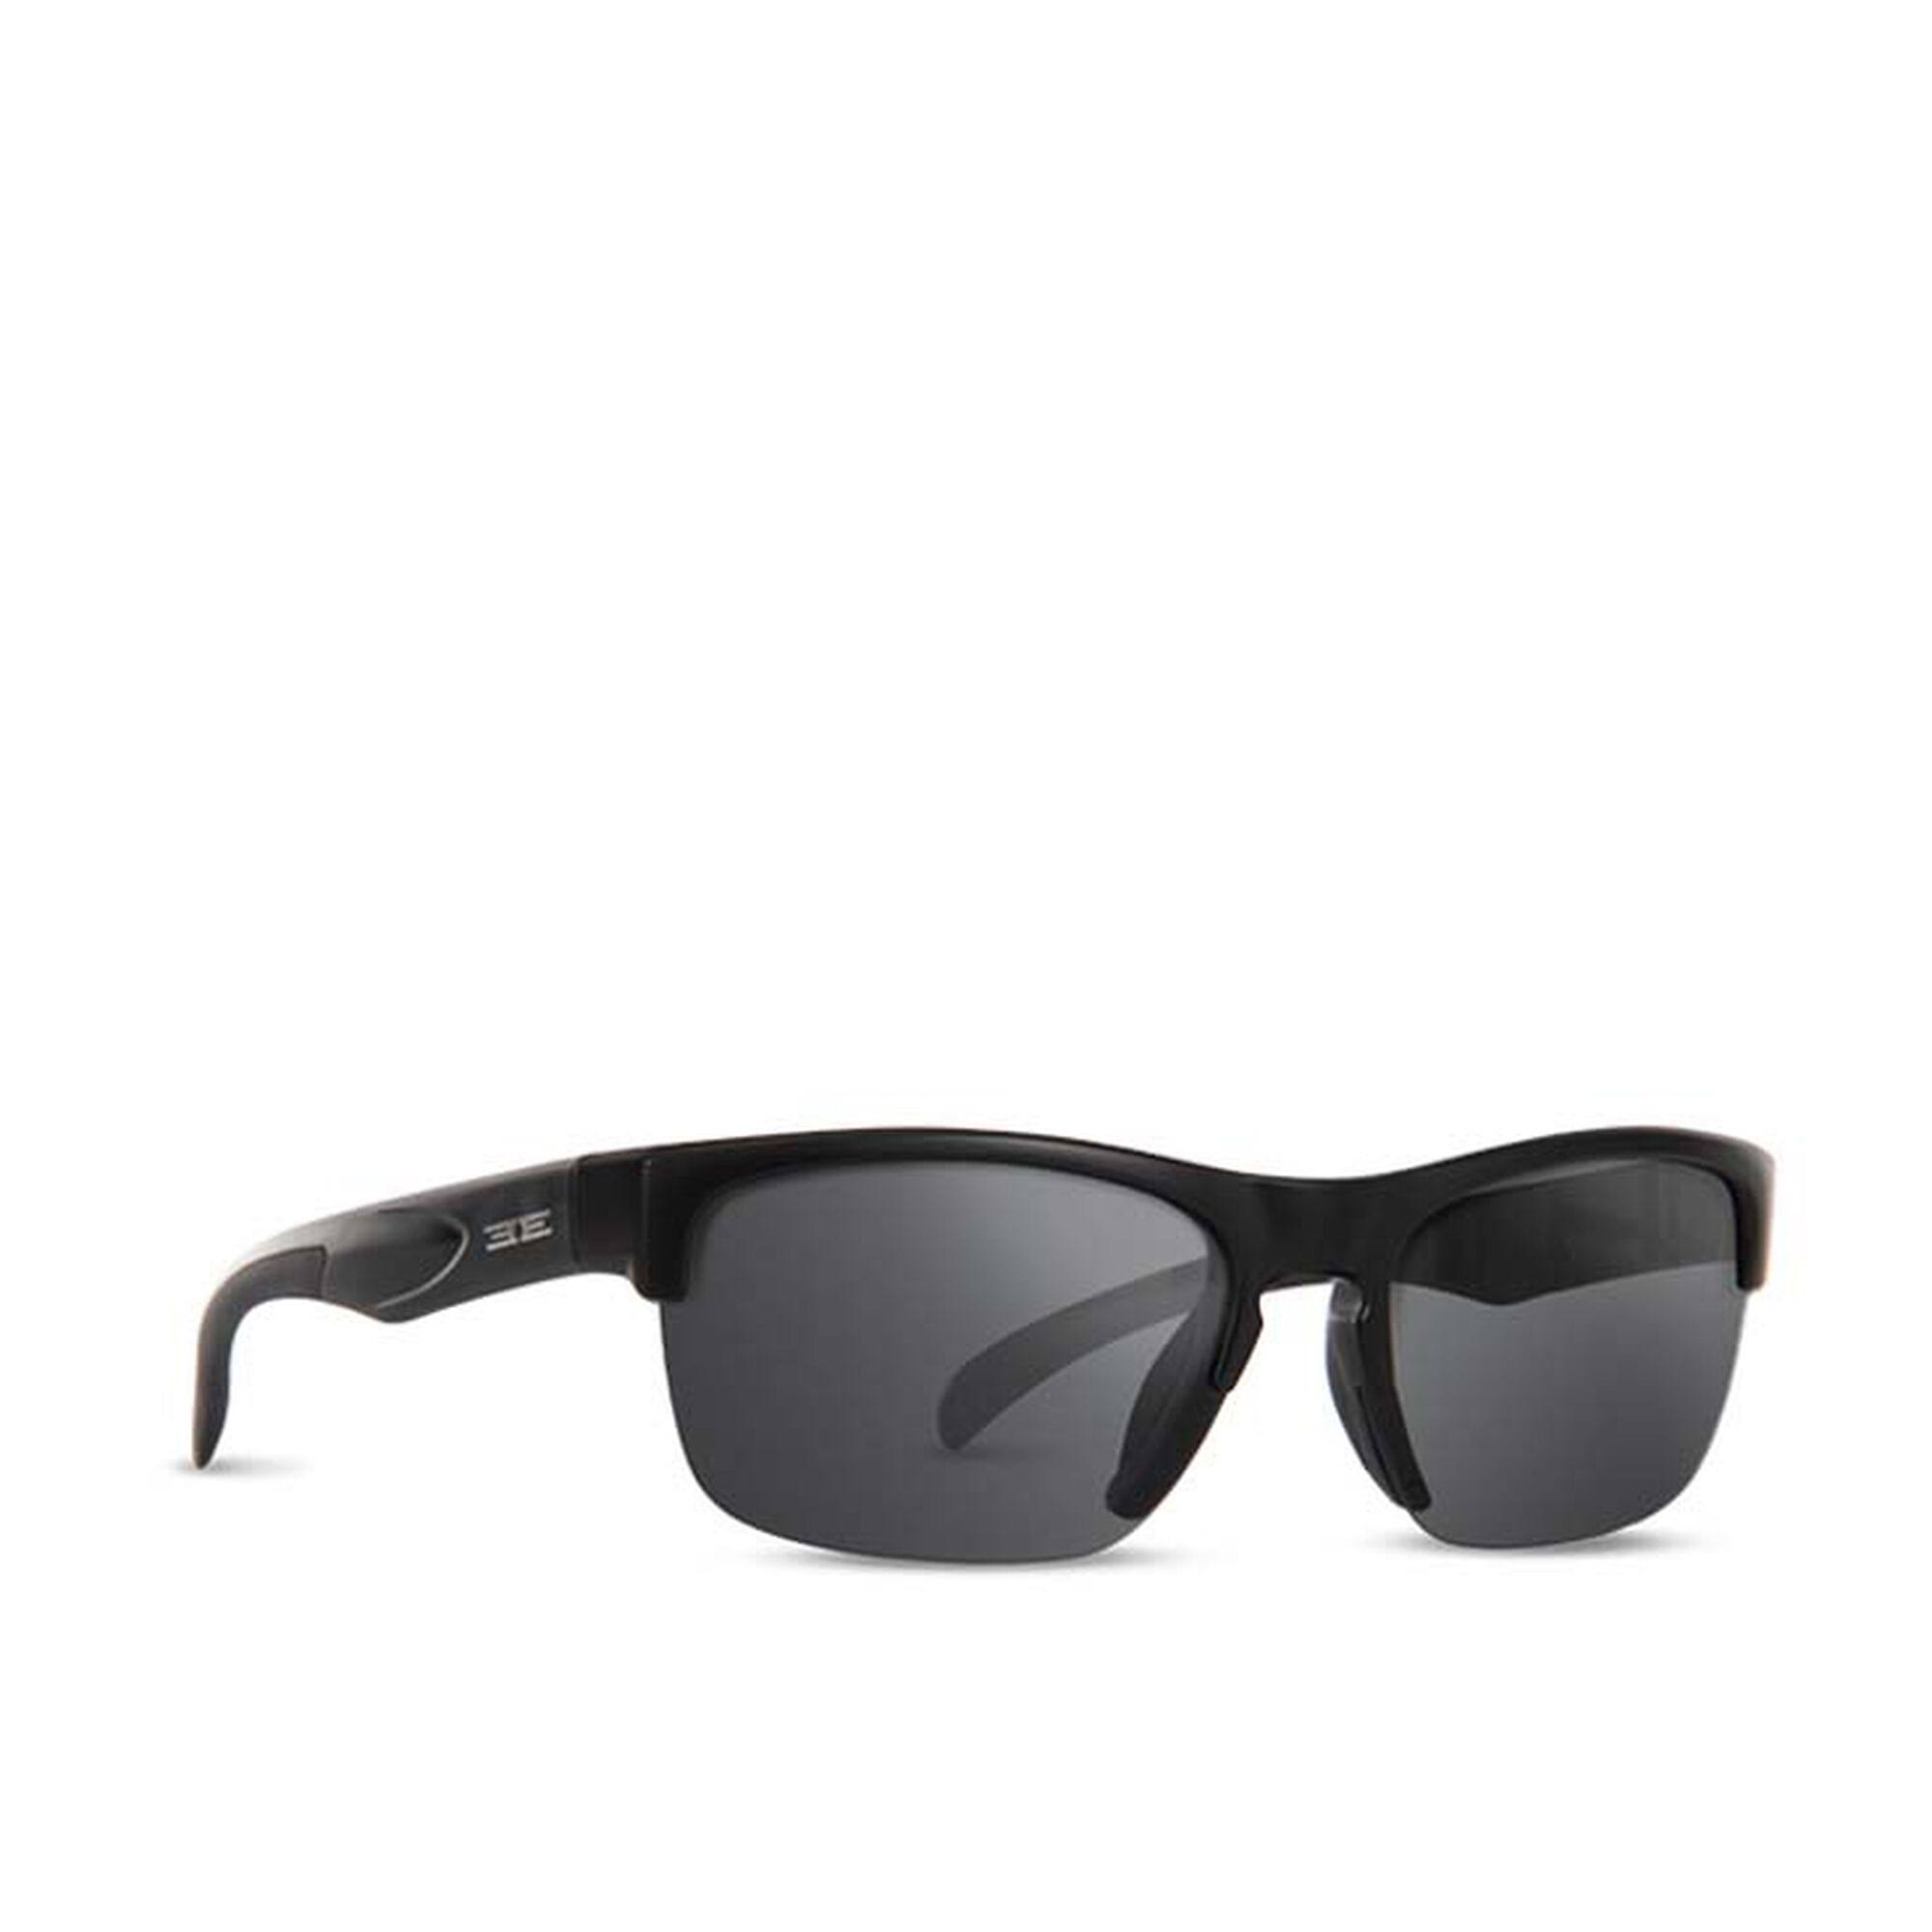 Epoch Sierra Sunglasses Black/Smoke